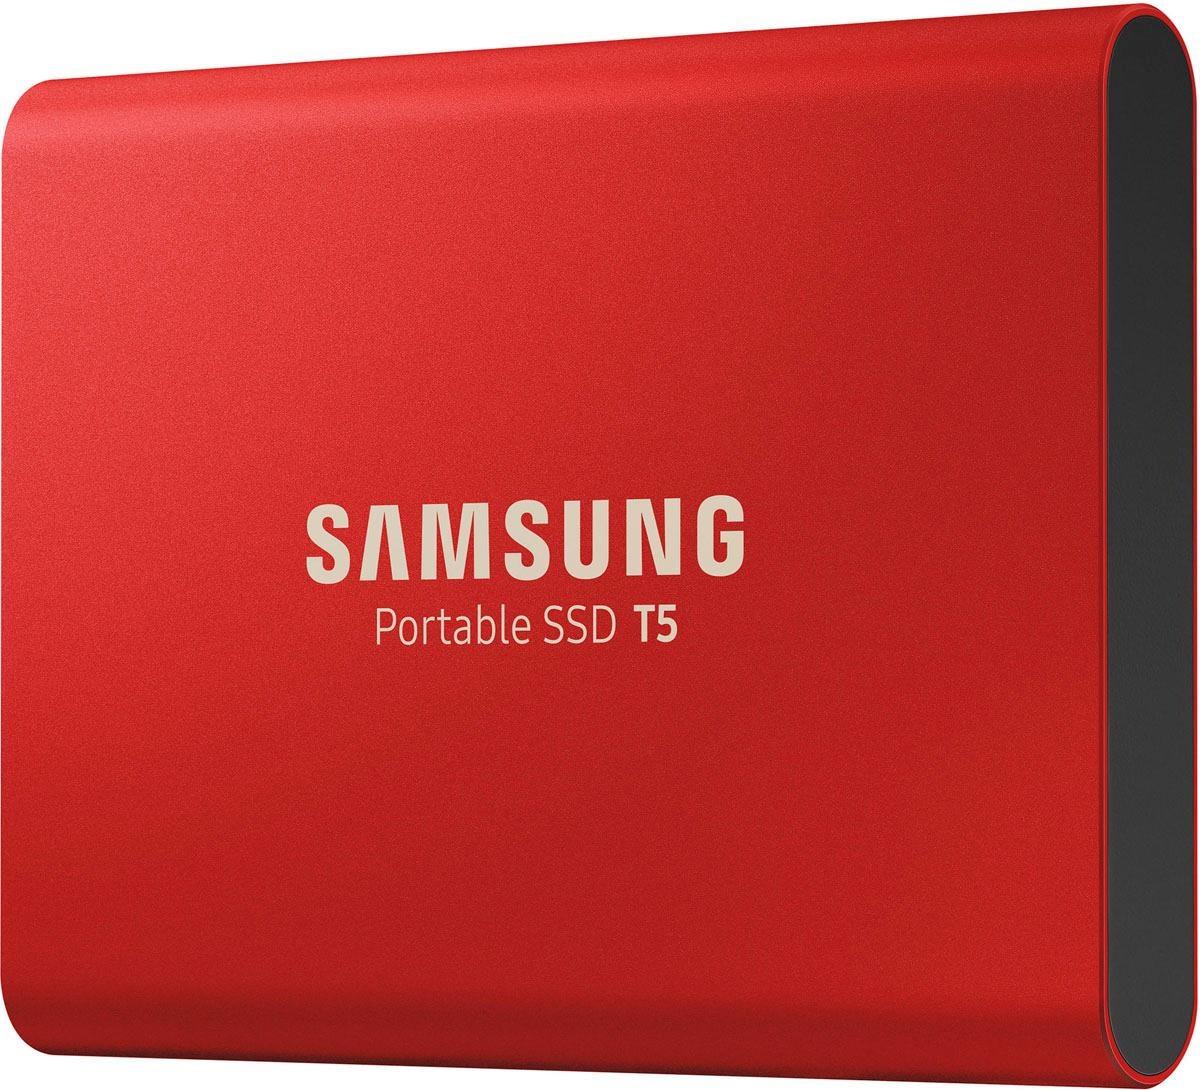 Samsung externe SSD »Portable SSD T5«, Anschluss USB 3.1, USB 3.1